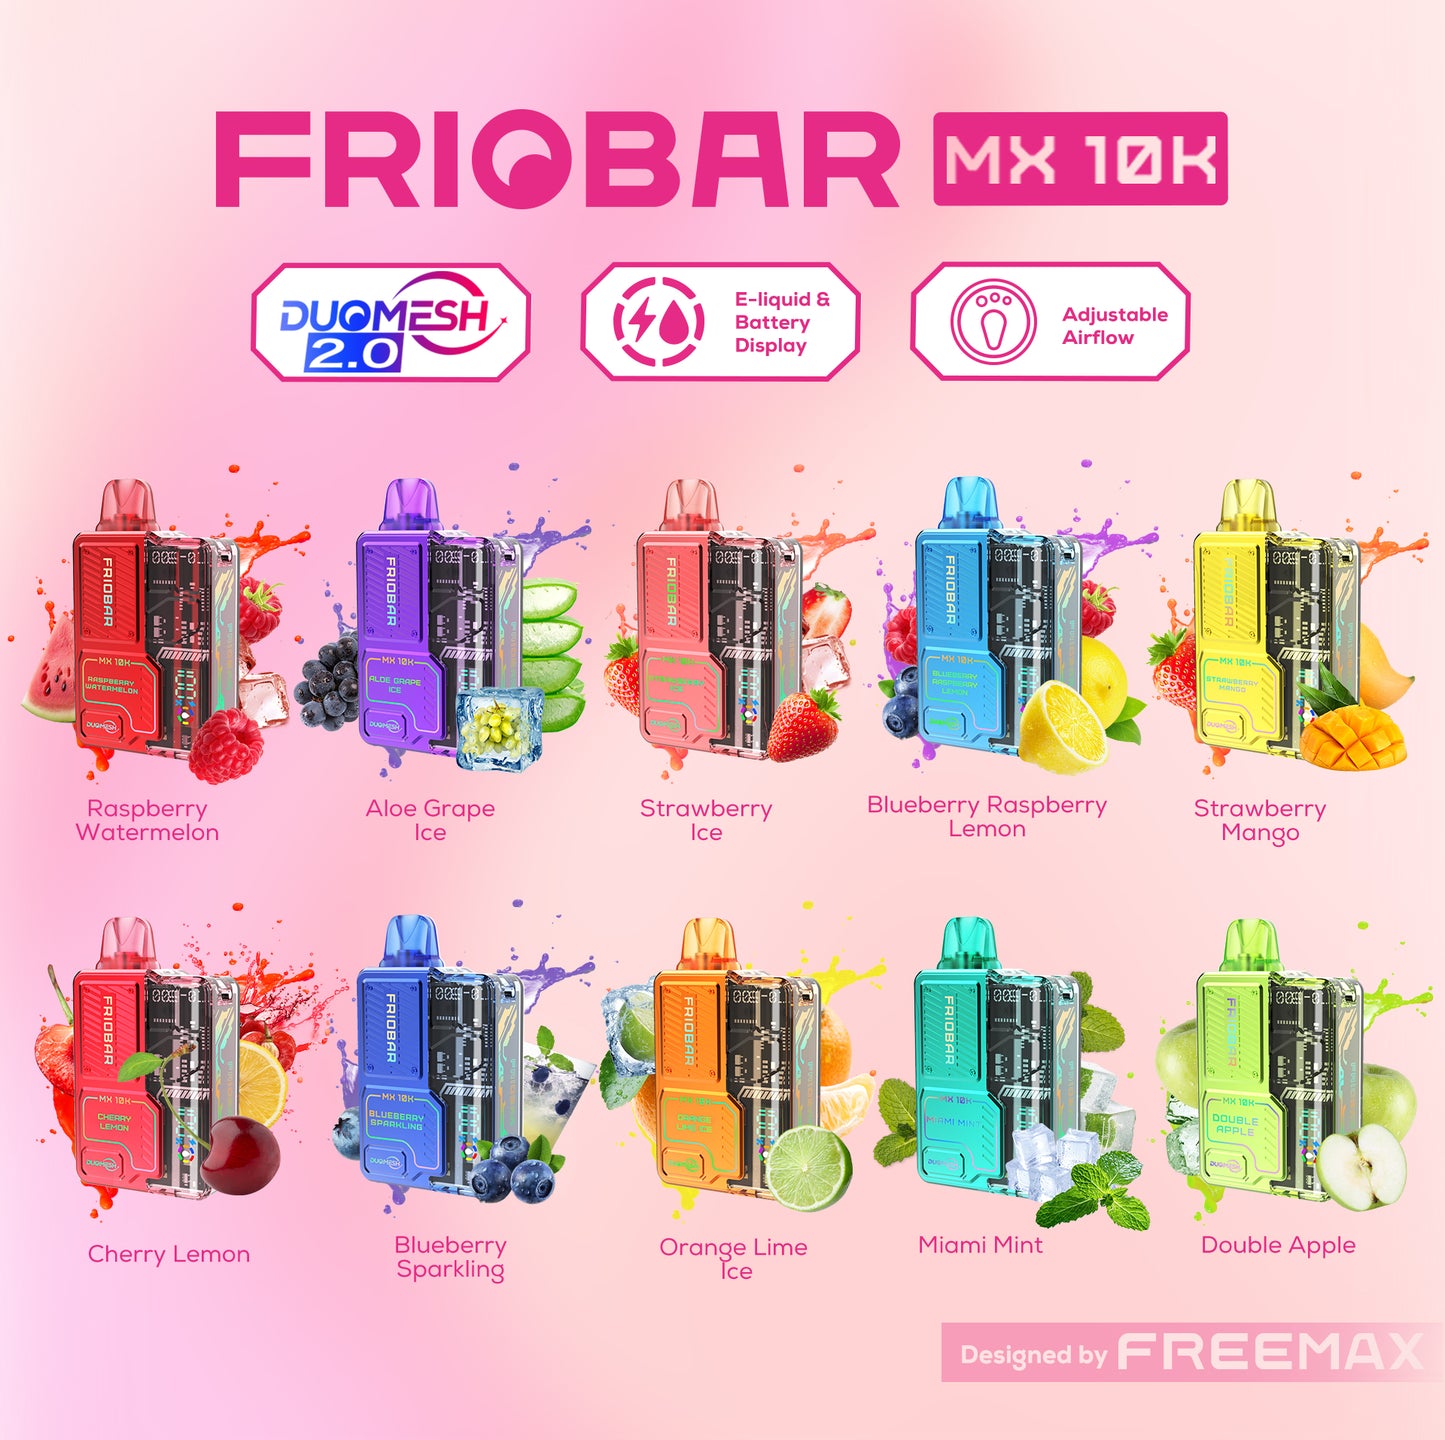 FrioBar MX 10K Puffs Disposable Vape Device